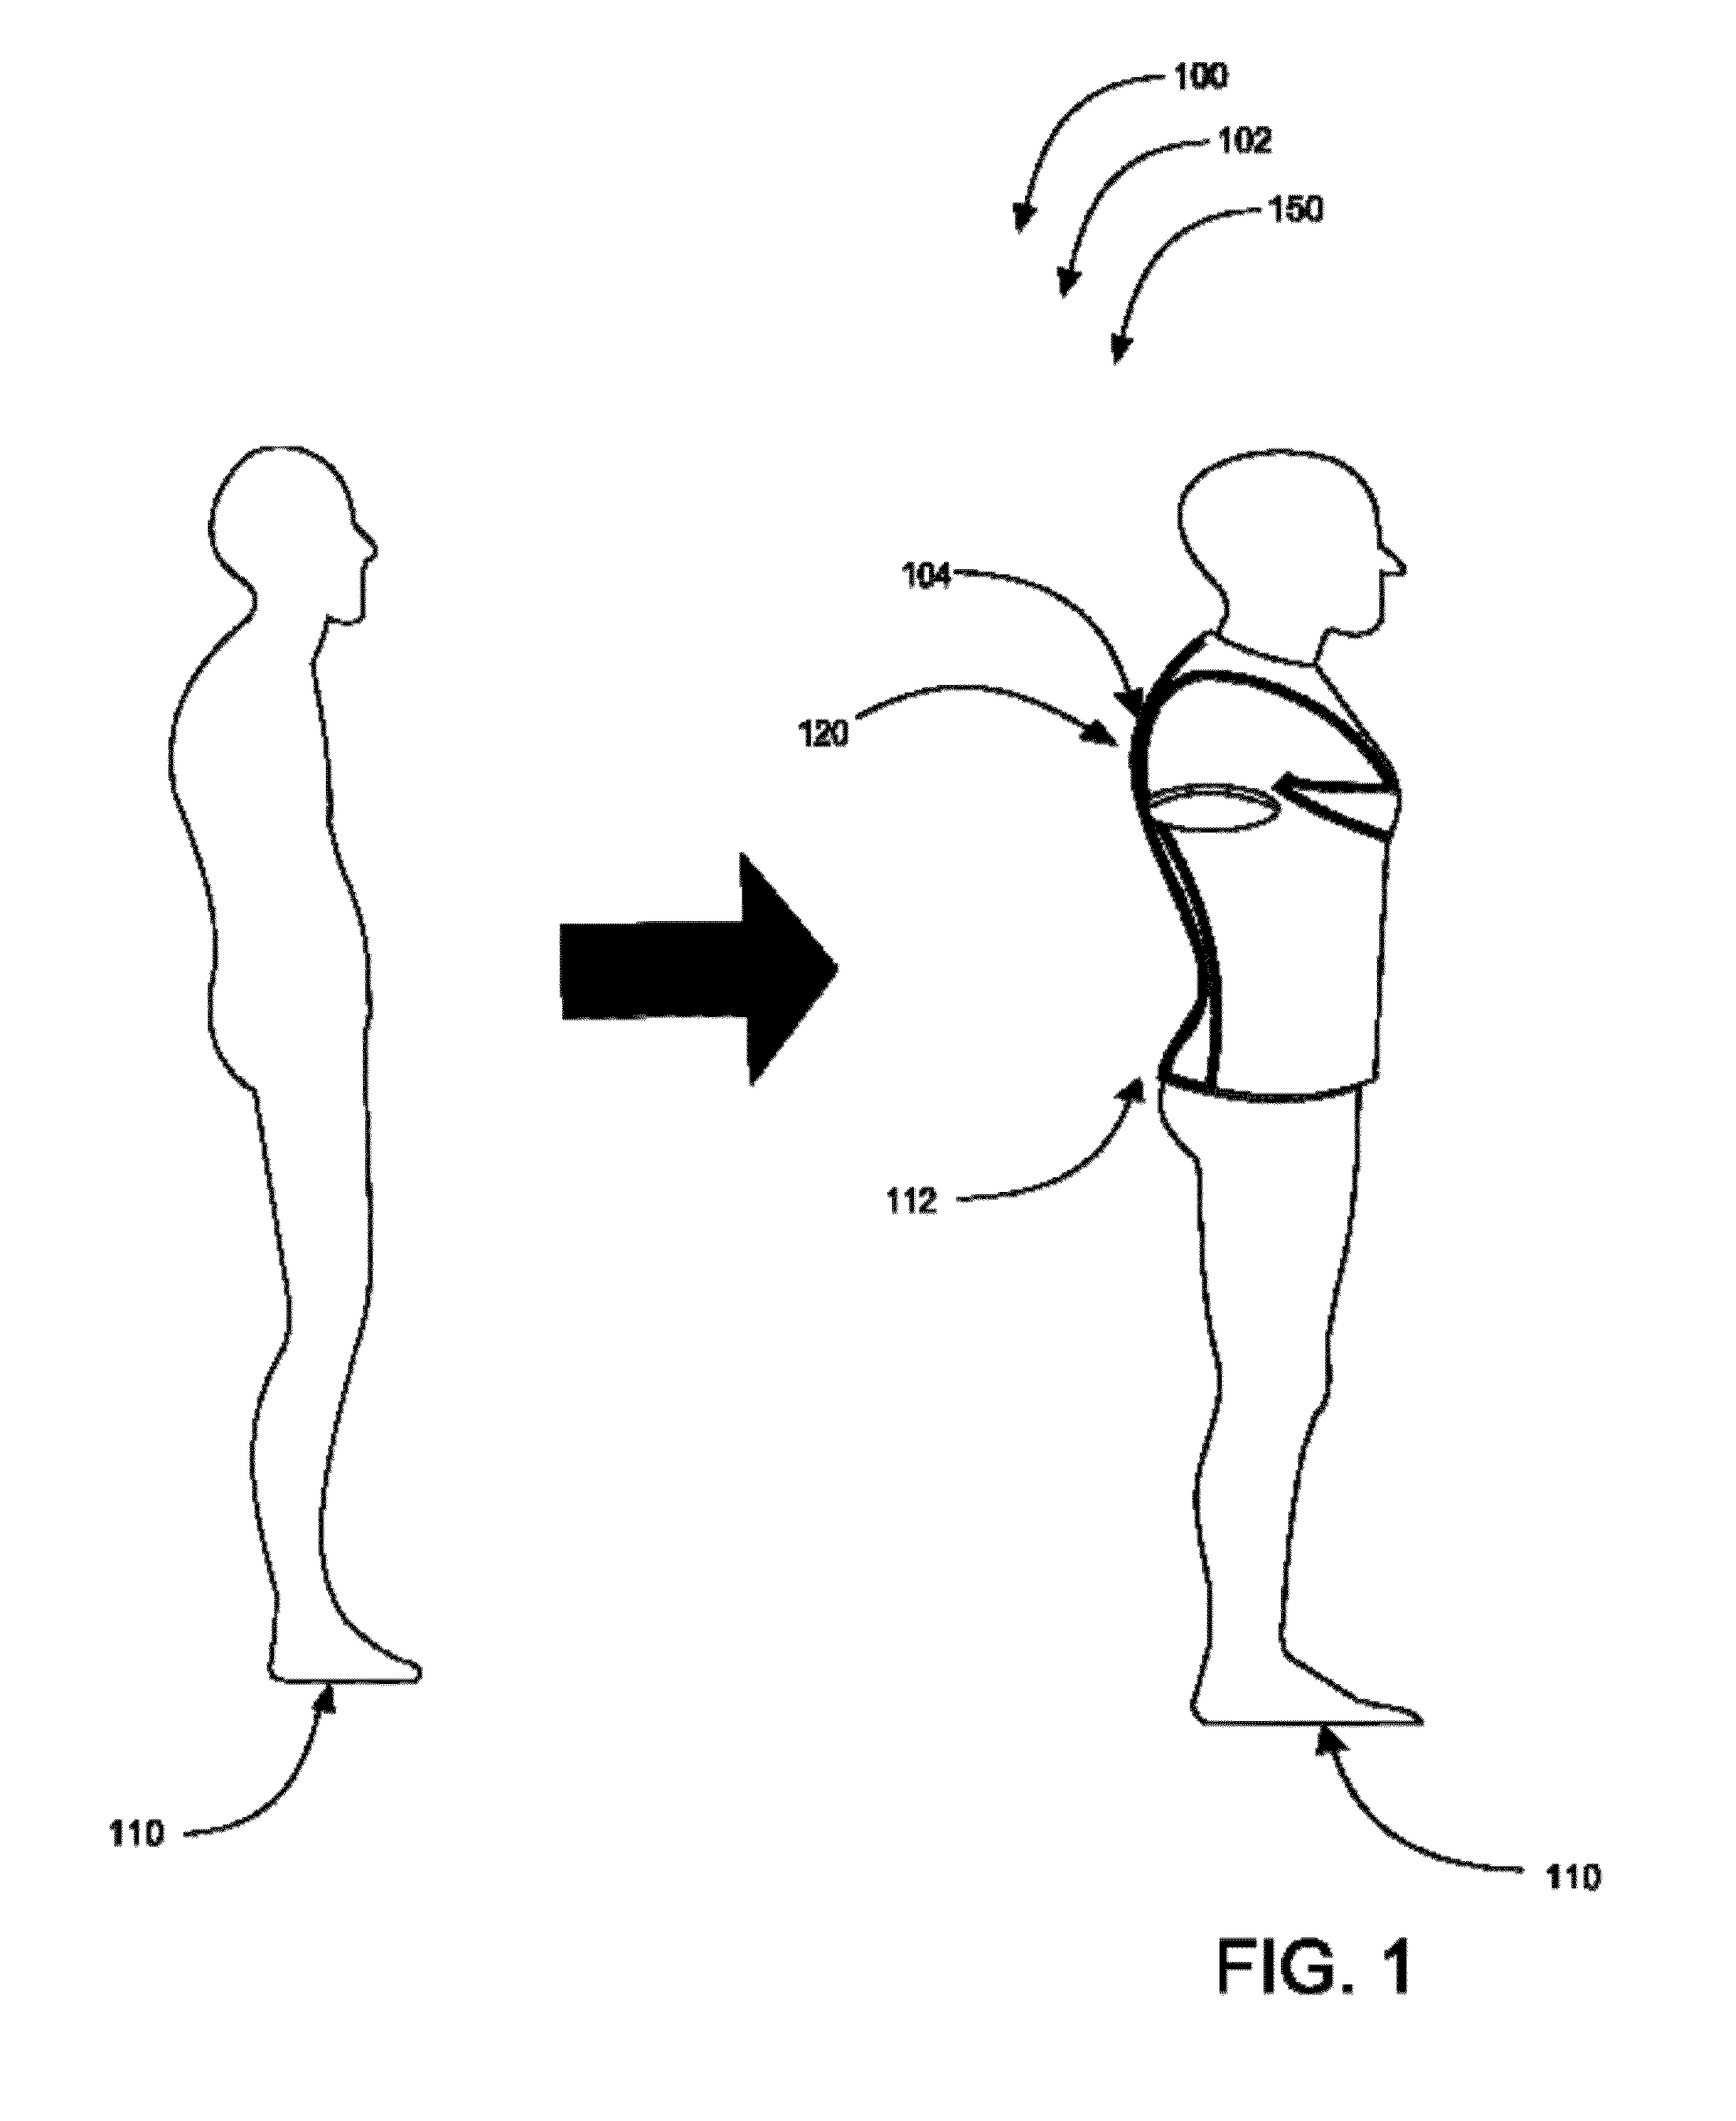 Spine-align garment systems